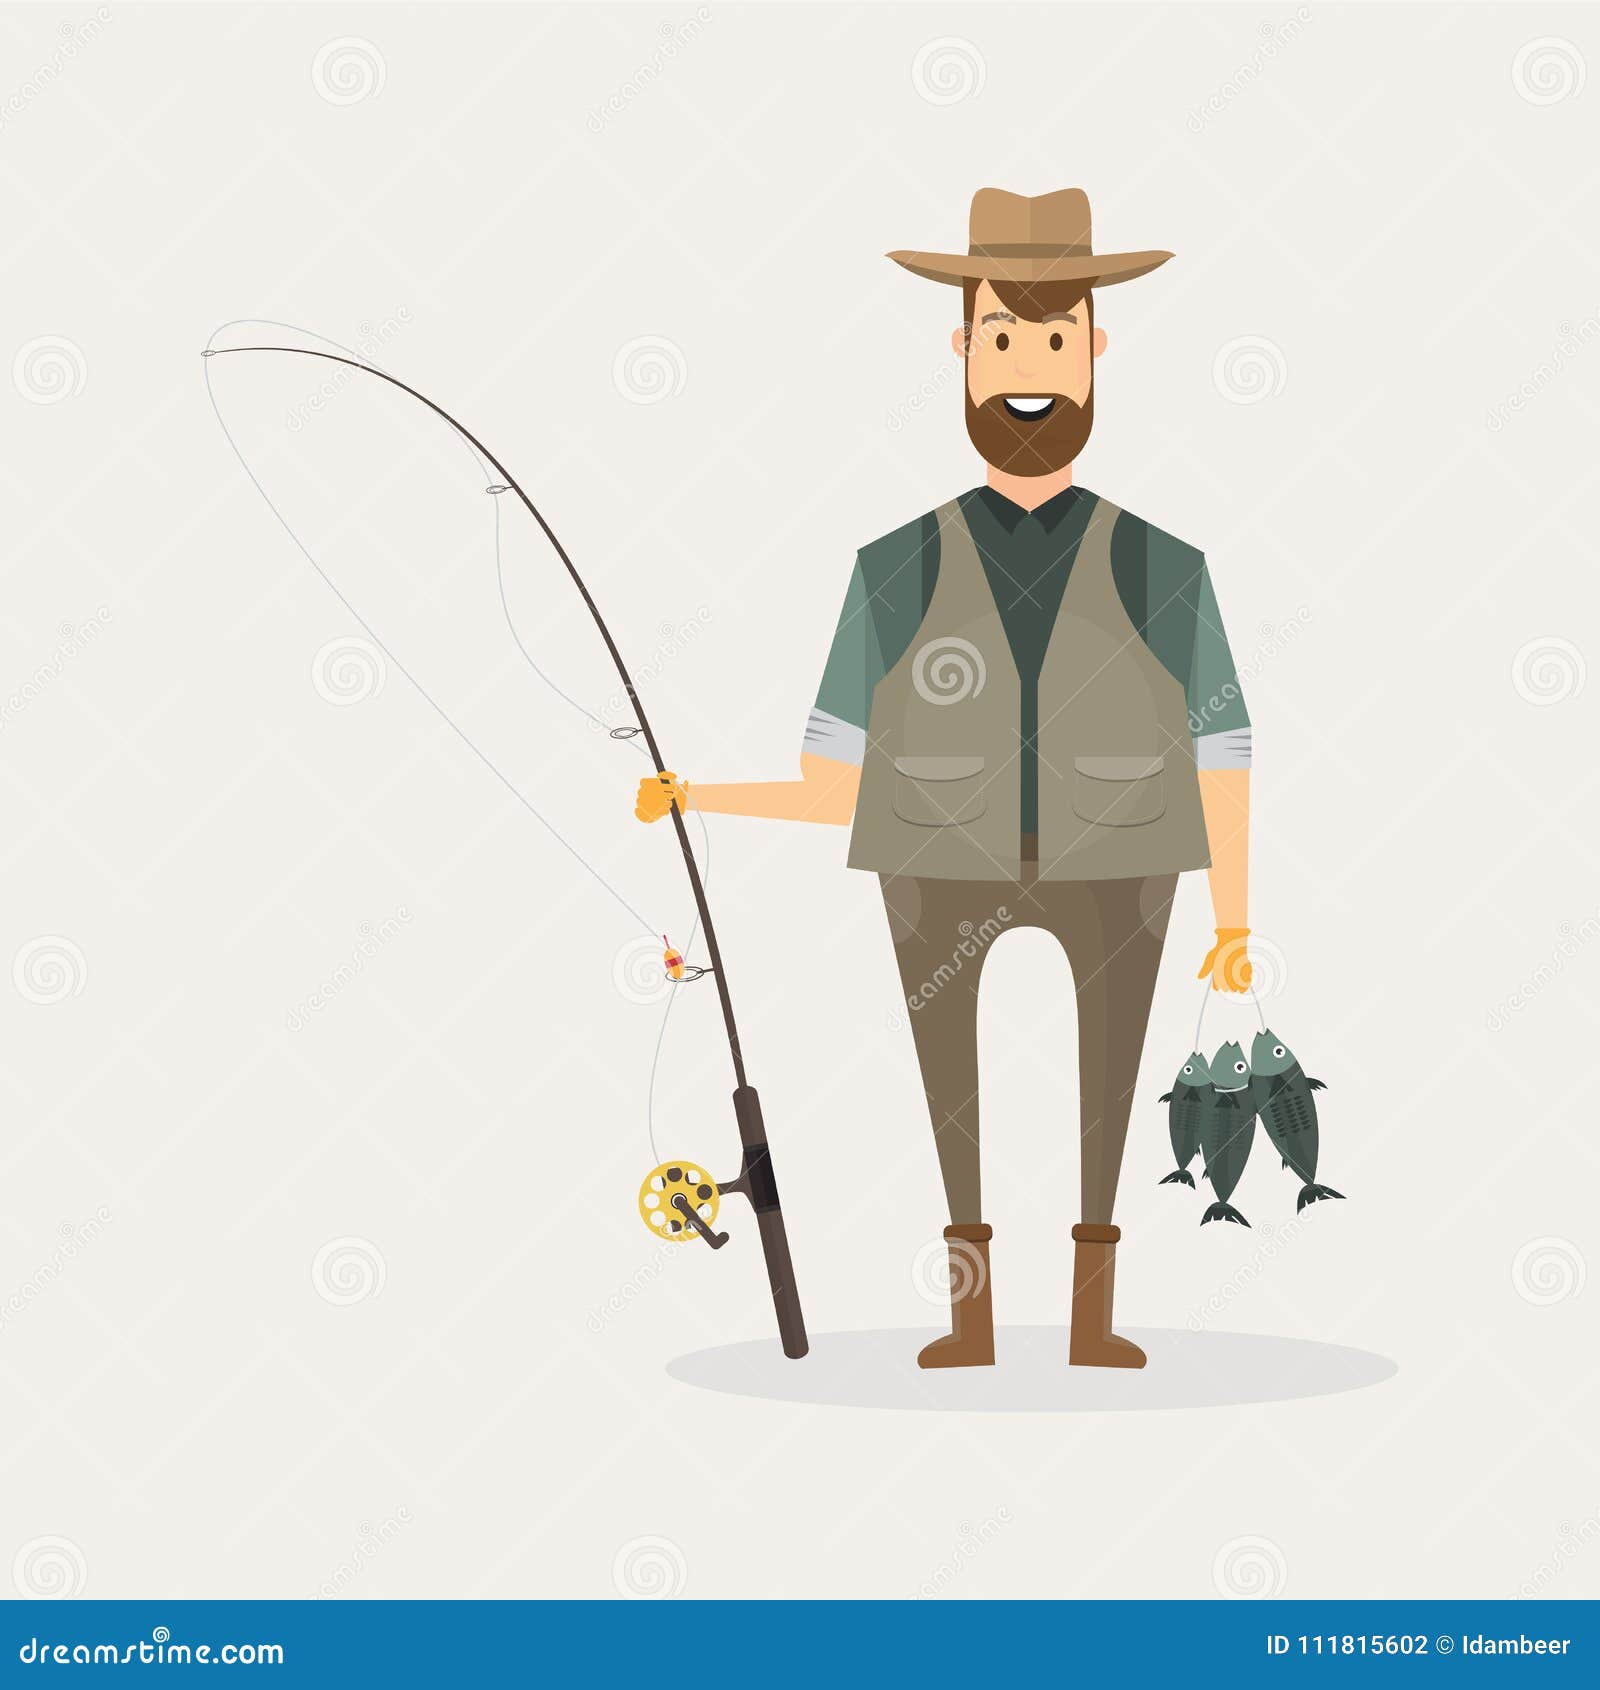 https://thumbs.dreamstime.com/z/fisherman-character-holding-big-fish-fishing-rod-la-fisherman-character-holding-big-fish-fishing-rod-111815602.jpg